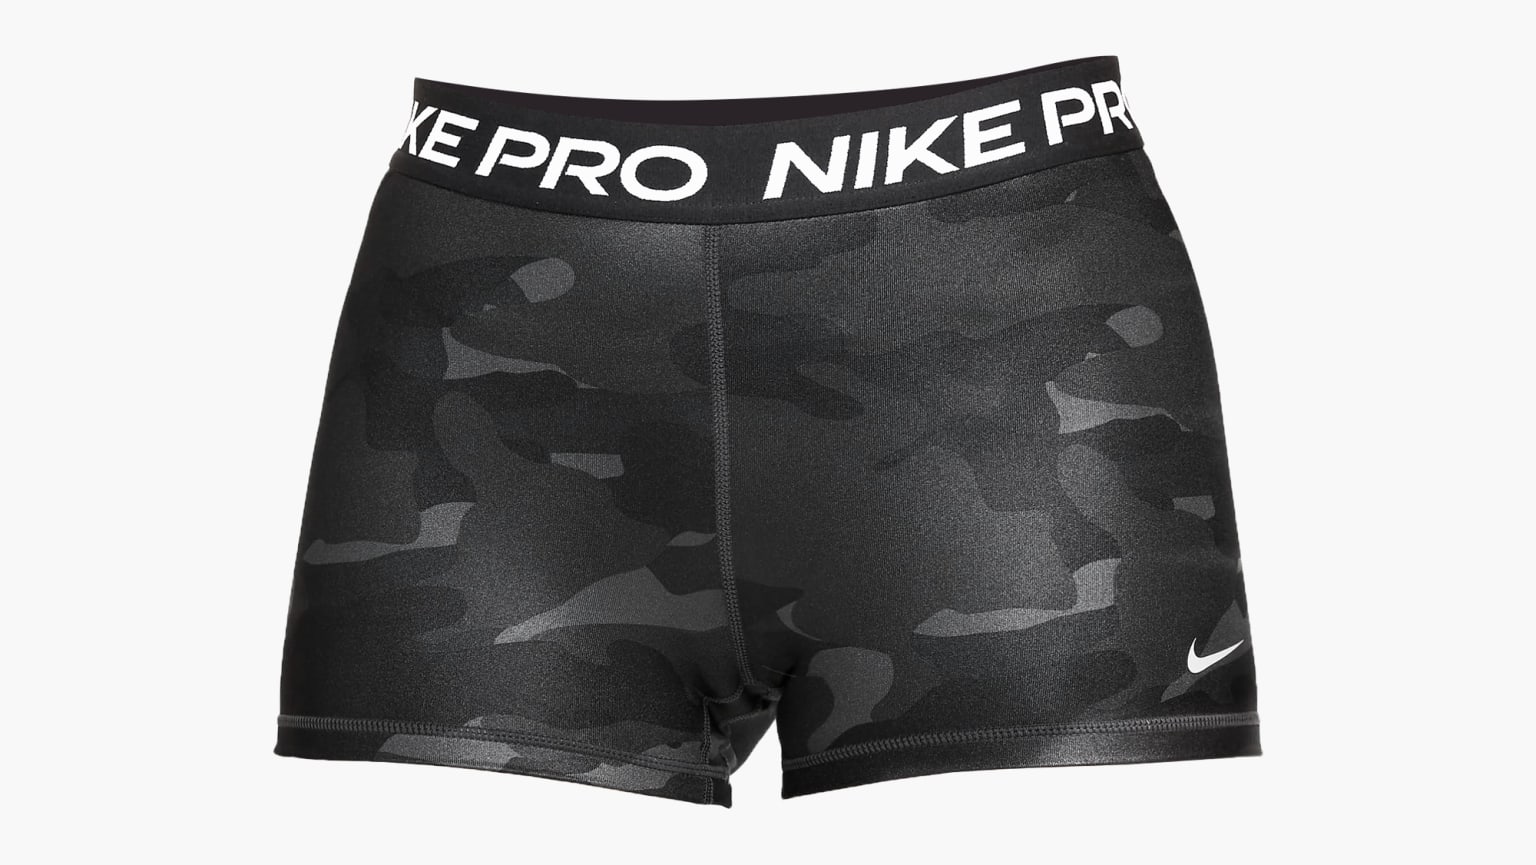 Nike Pro Women's 3 Shorts Black/Grey / XL